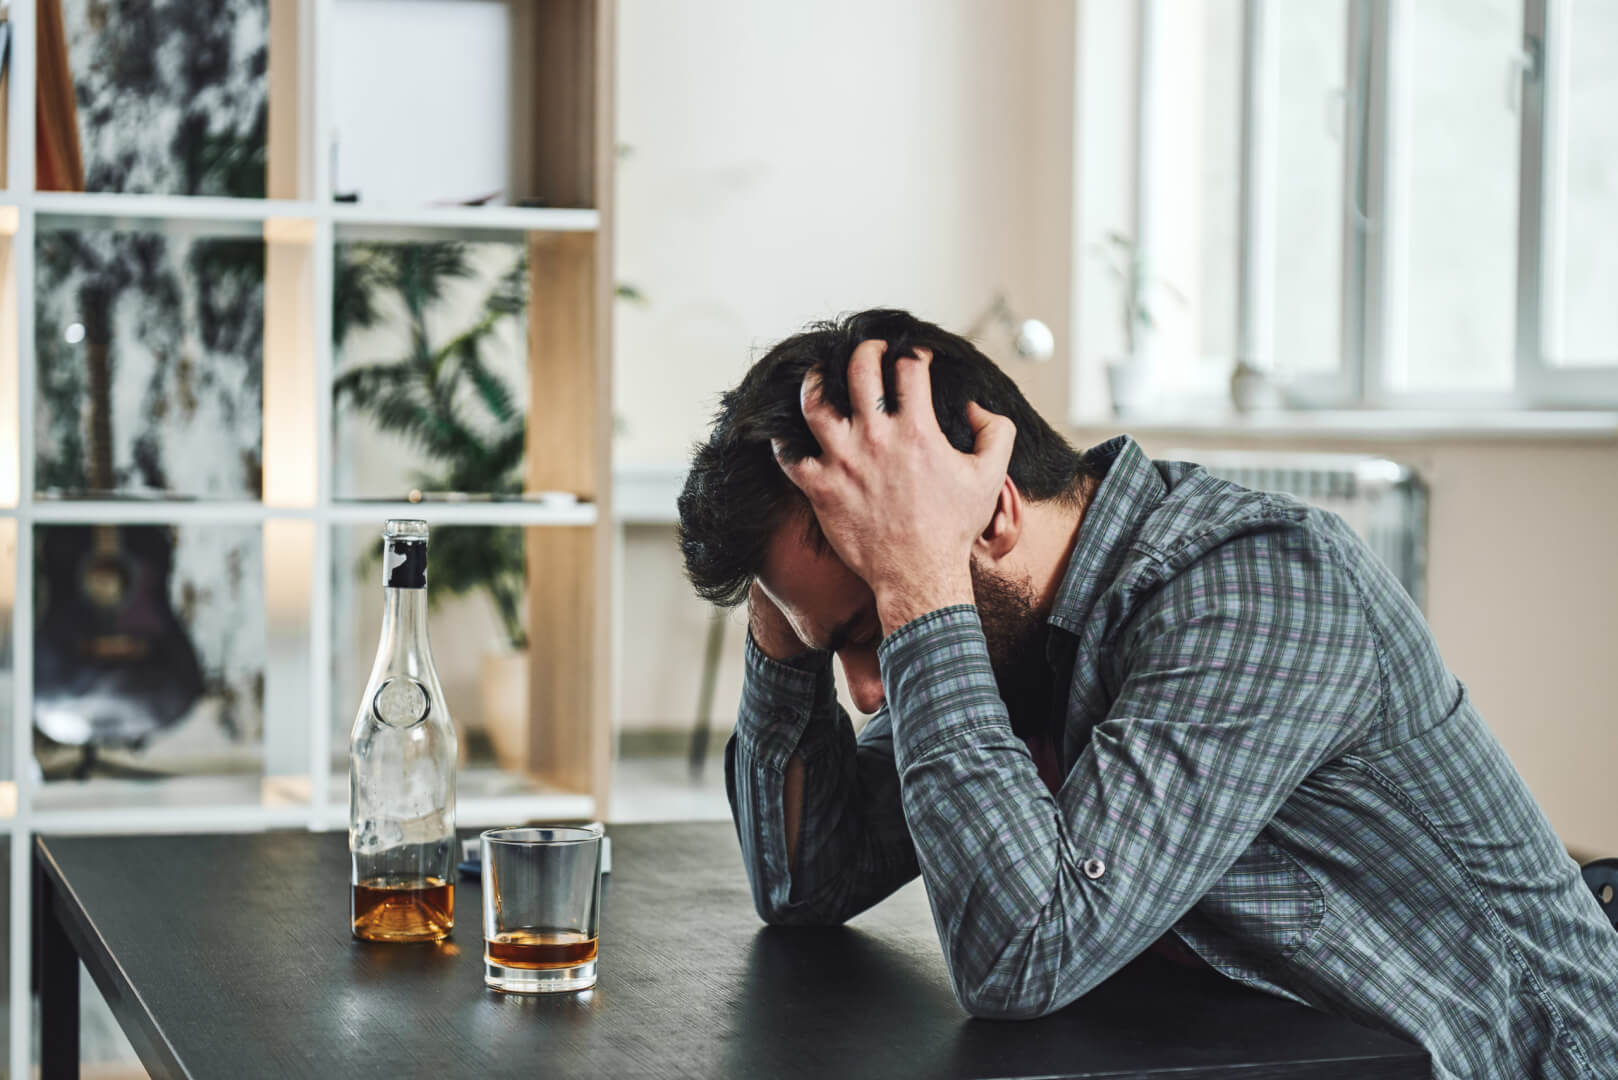 is alcoholism hereditary?